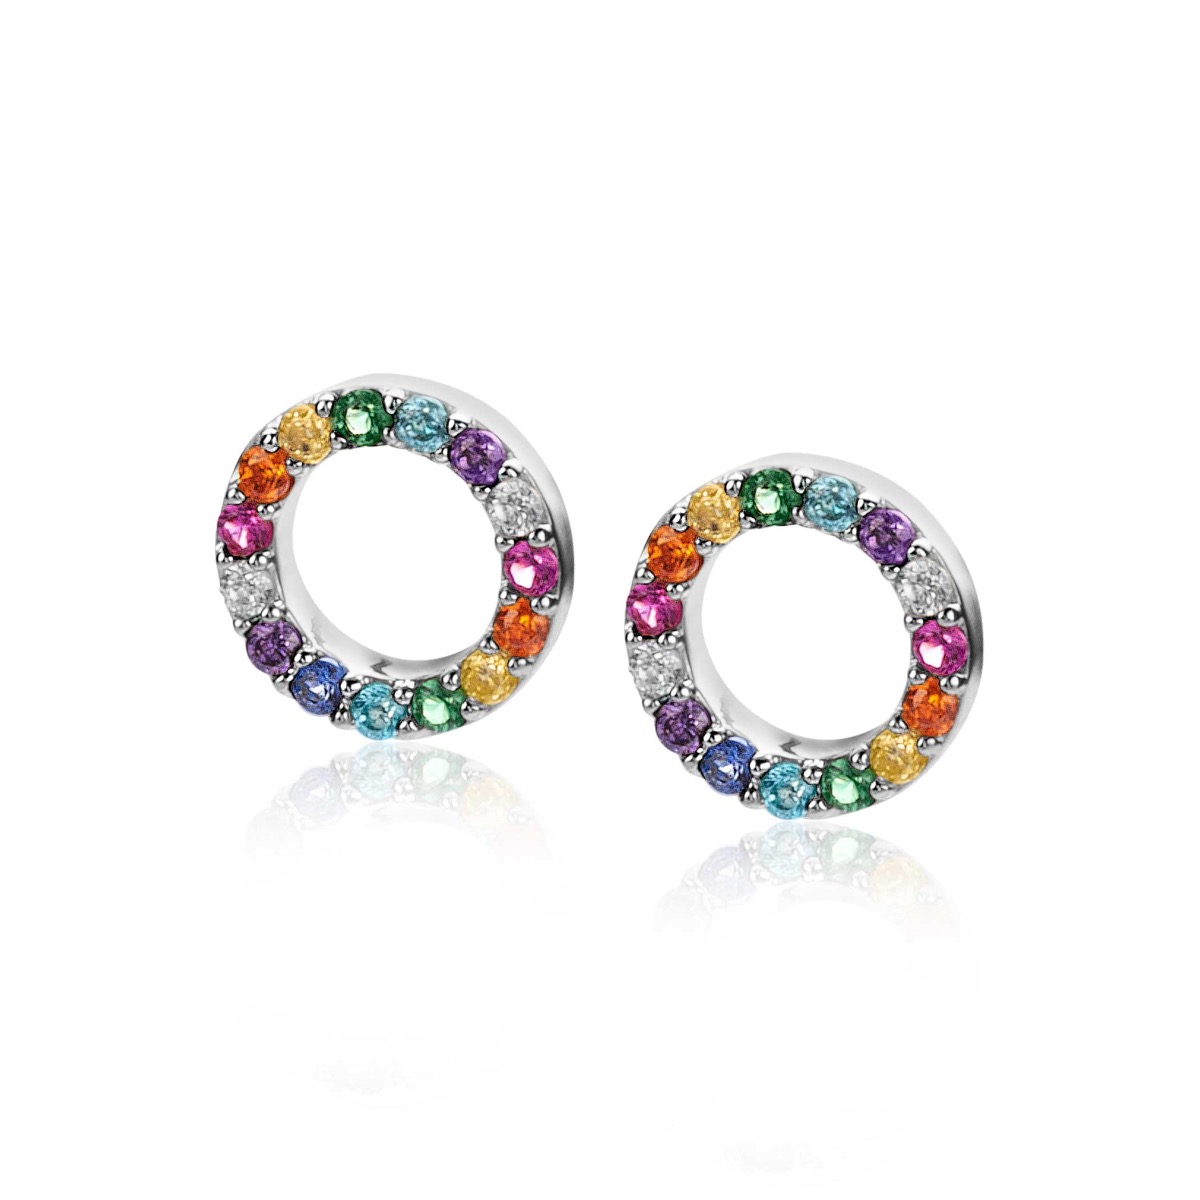 8mm ZINZI Sterling Silver Earrings Pendants Round Rainbow Color Stones ZICH2170Z (excl. hoop earrings)